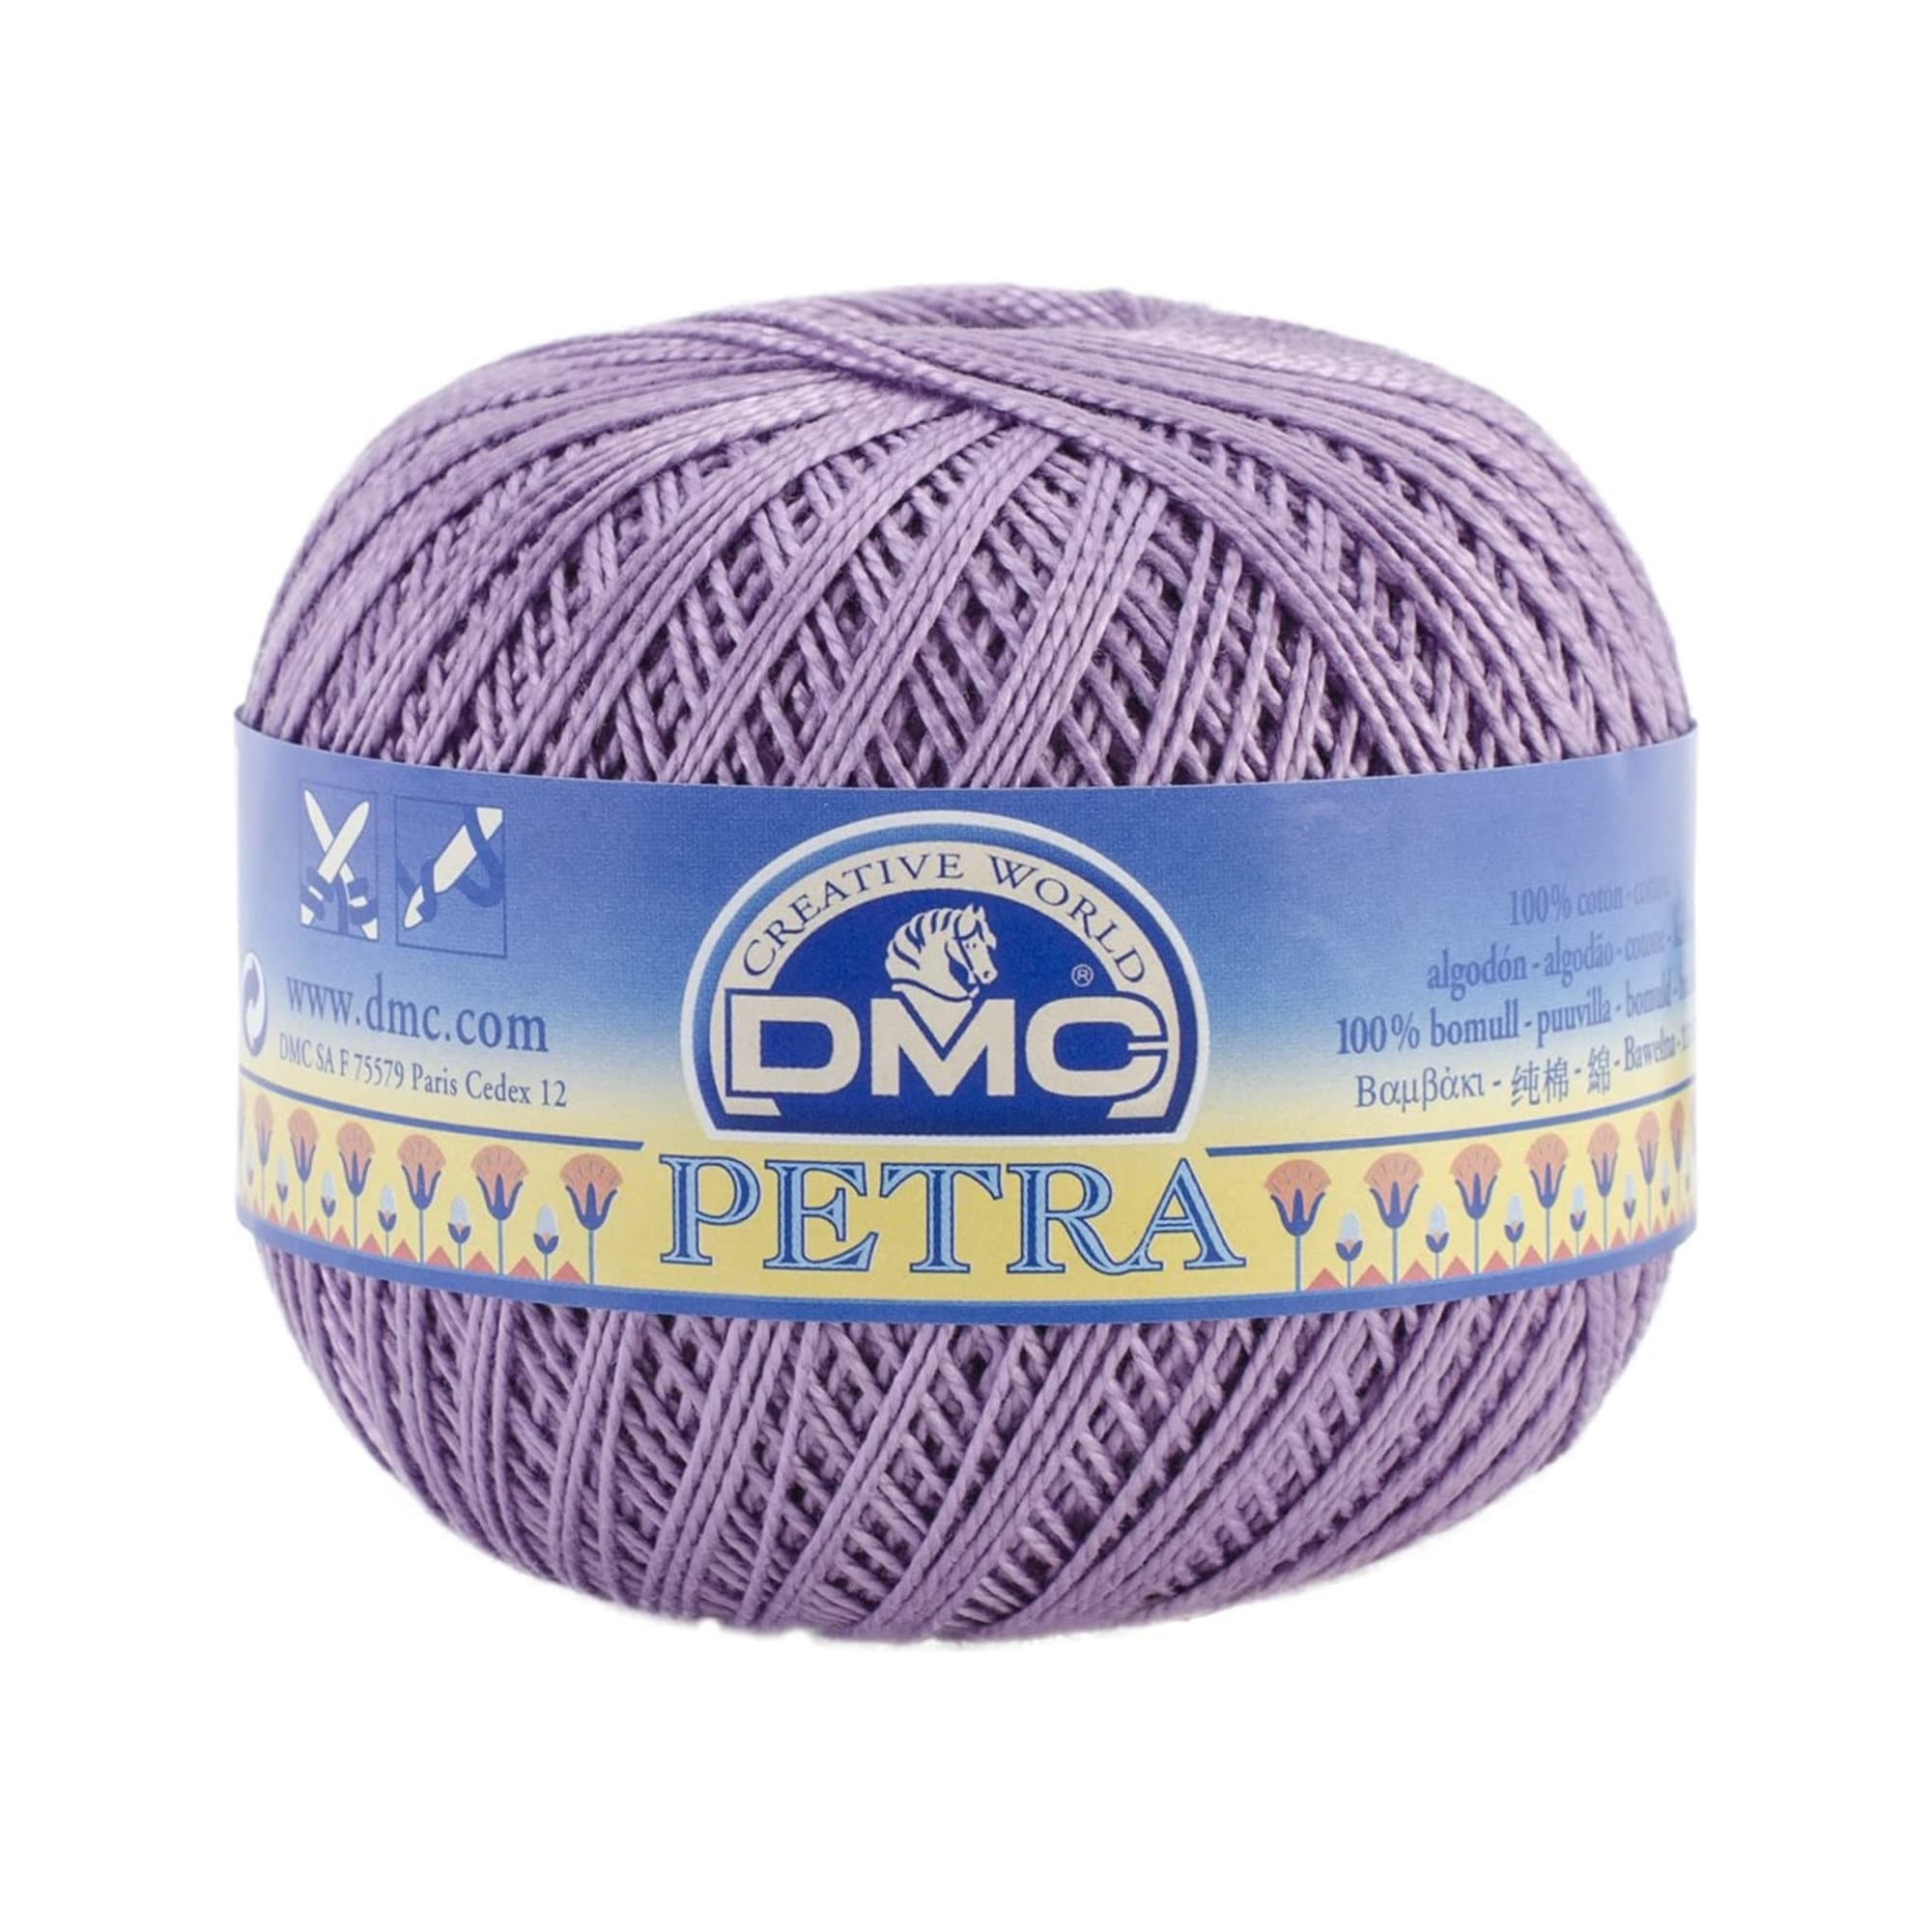 DMC Petra Crochet Cotton Thread Size 5 306 Yards color - Etsy Finland